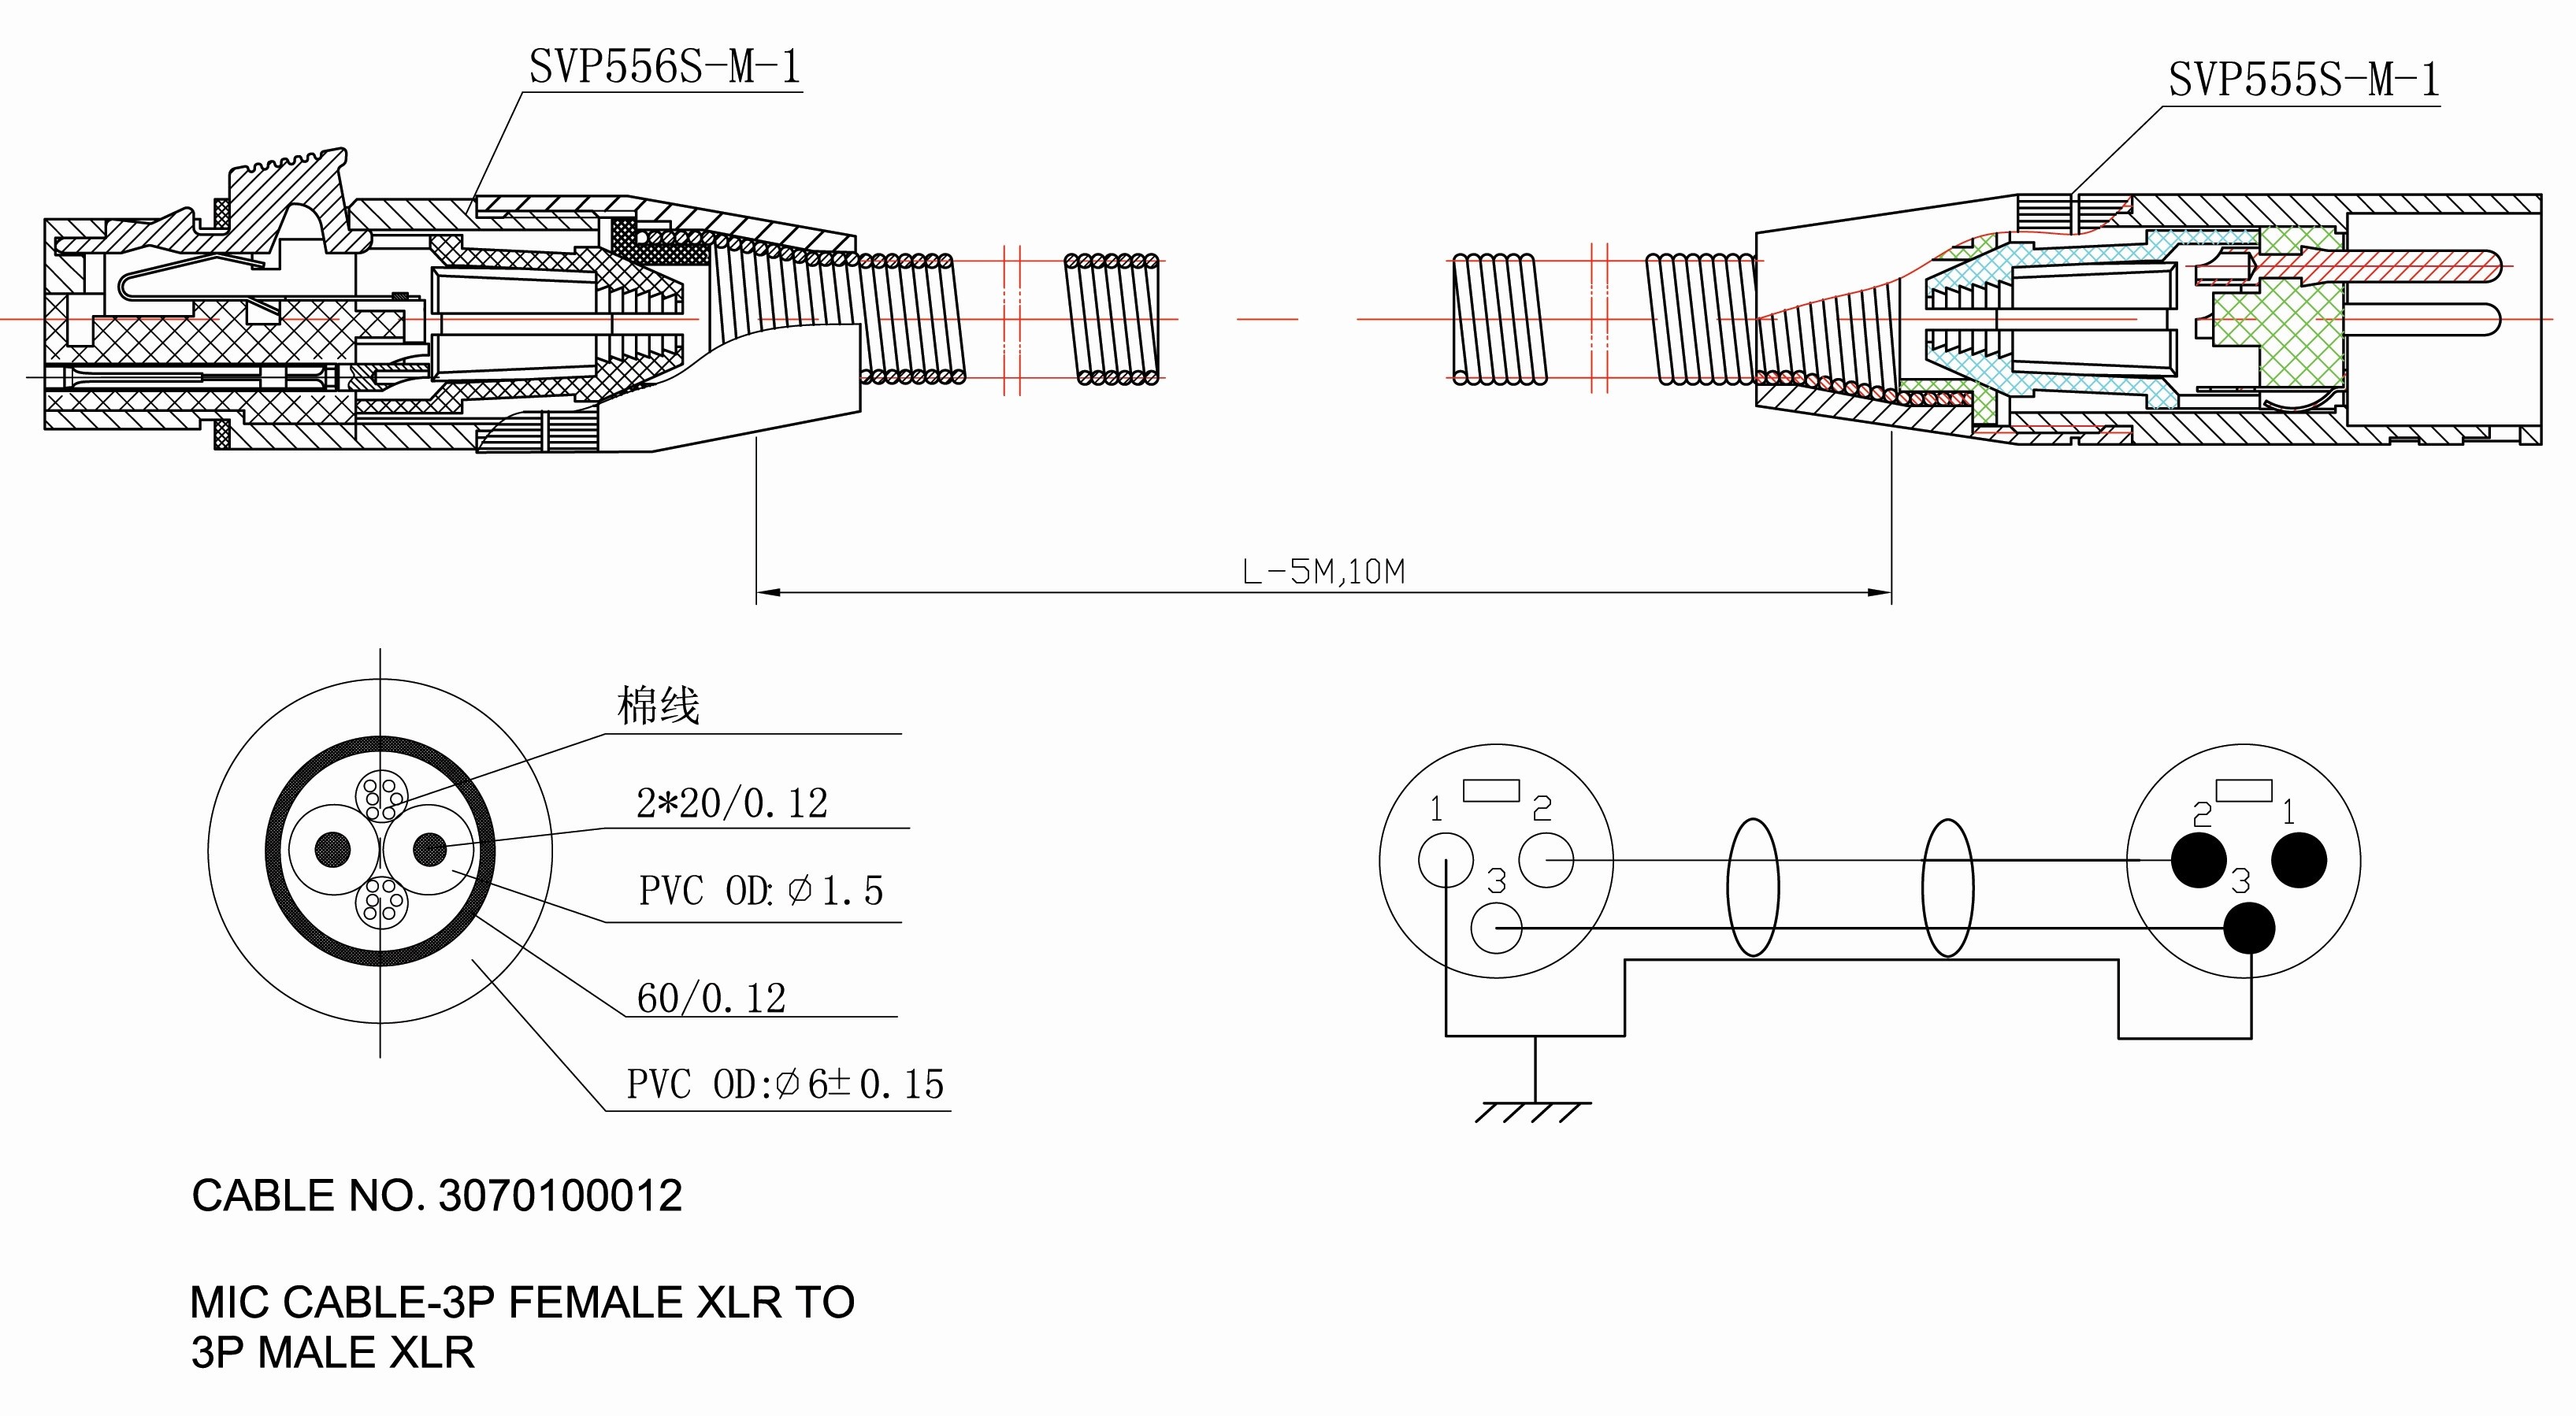 Schecter Guitar Wiring Diagram Inspirationa Wiring Diagram Schecter Diamond Series Wiring Diagram